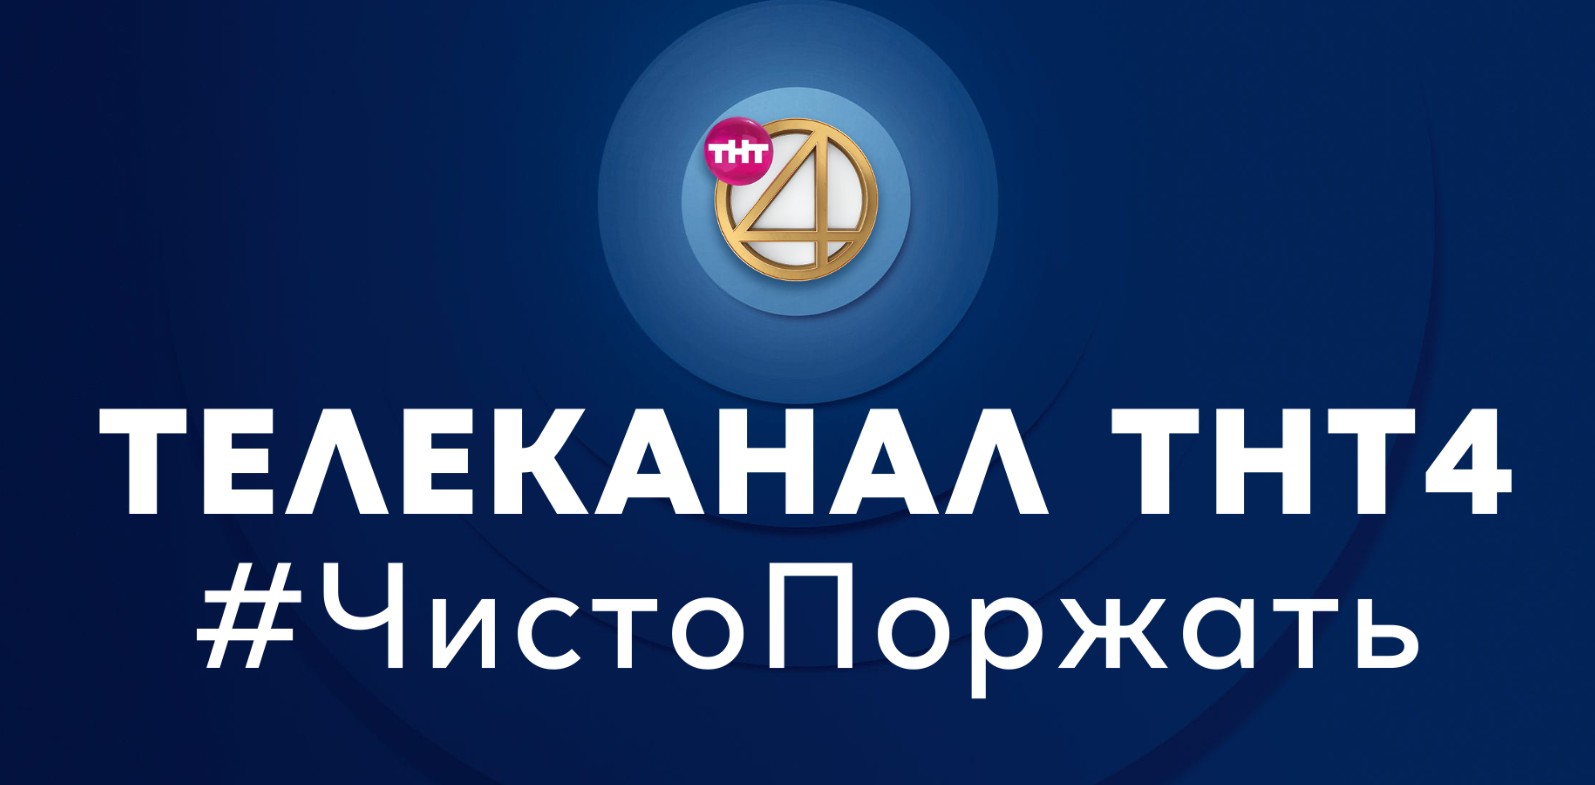 Передачи на сегодня на канале тнт 4. ТНТ 4. ТНТ 4 реклама. Рекламные ТНТ 4 04. Тнт4 Телеканалы России.